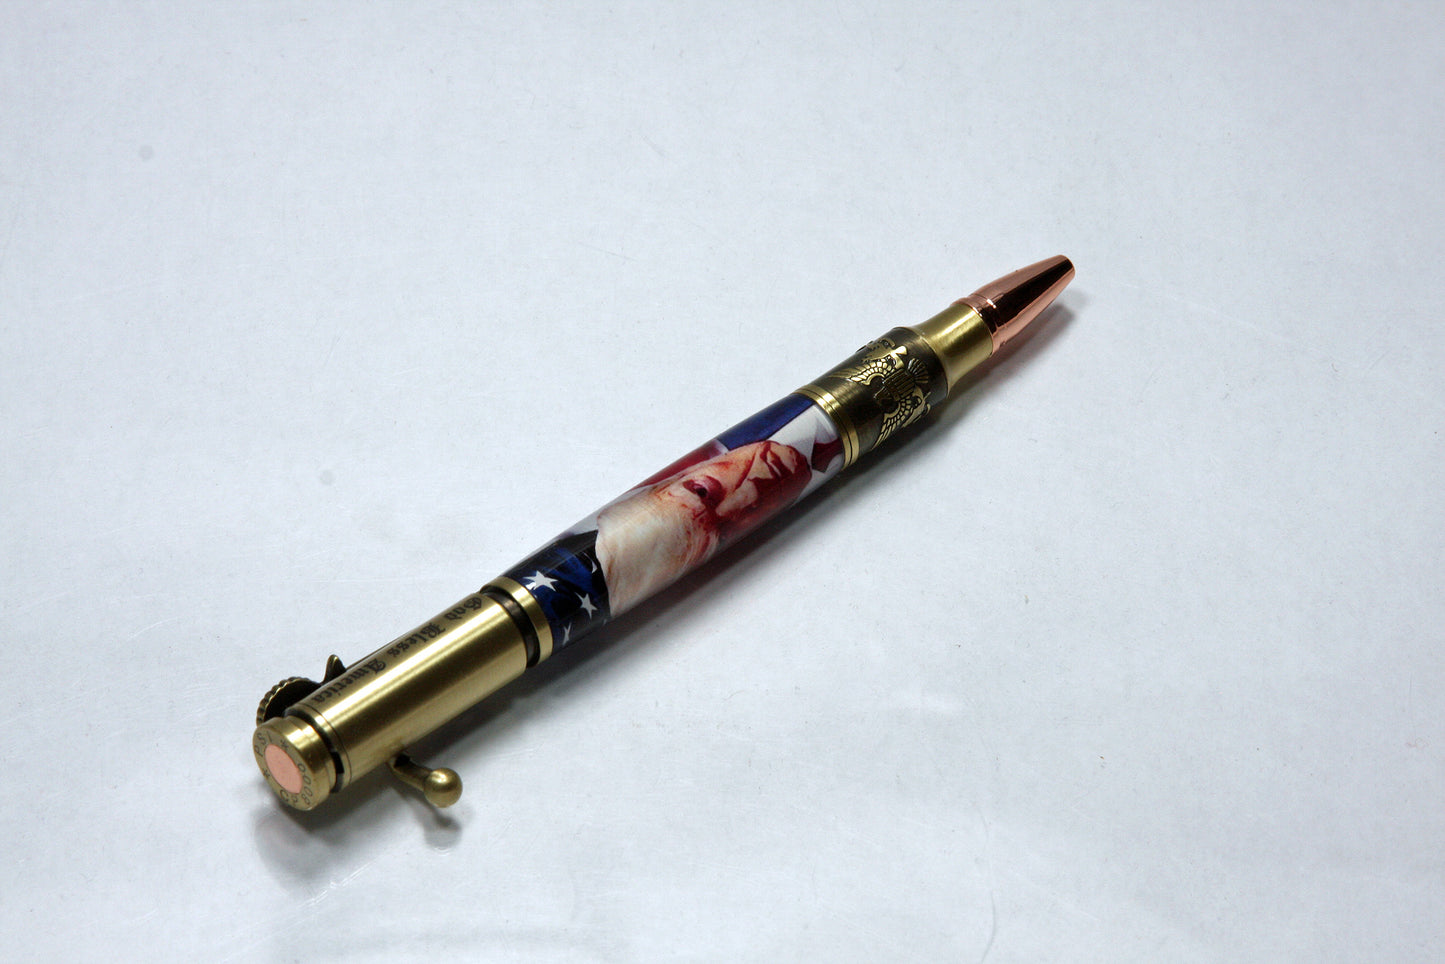 President Trump Theme Bald Eagle Insignia Bolt Action Pen – A Patriotic Writing Masterpiece